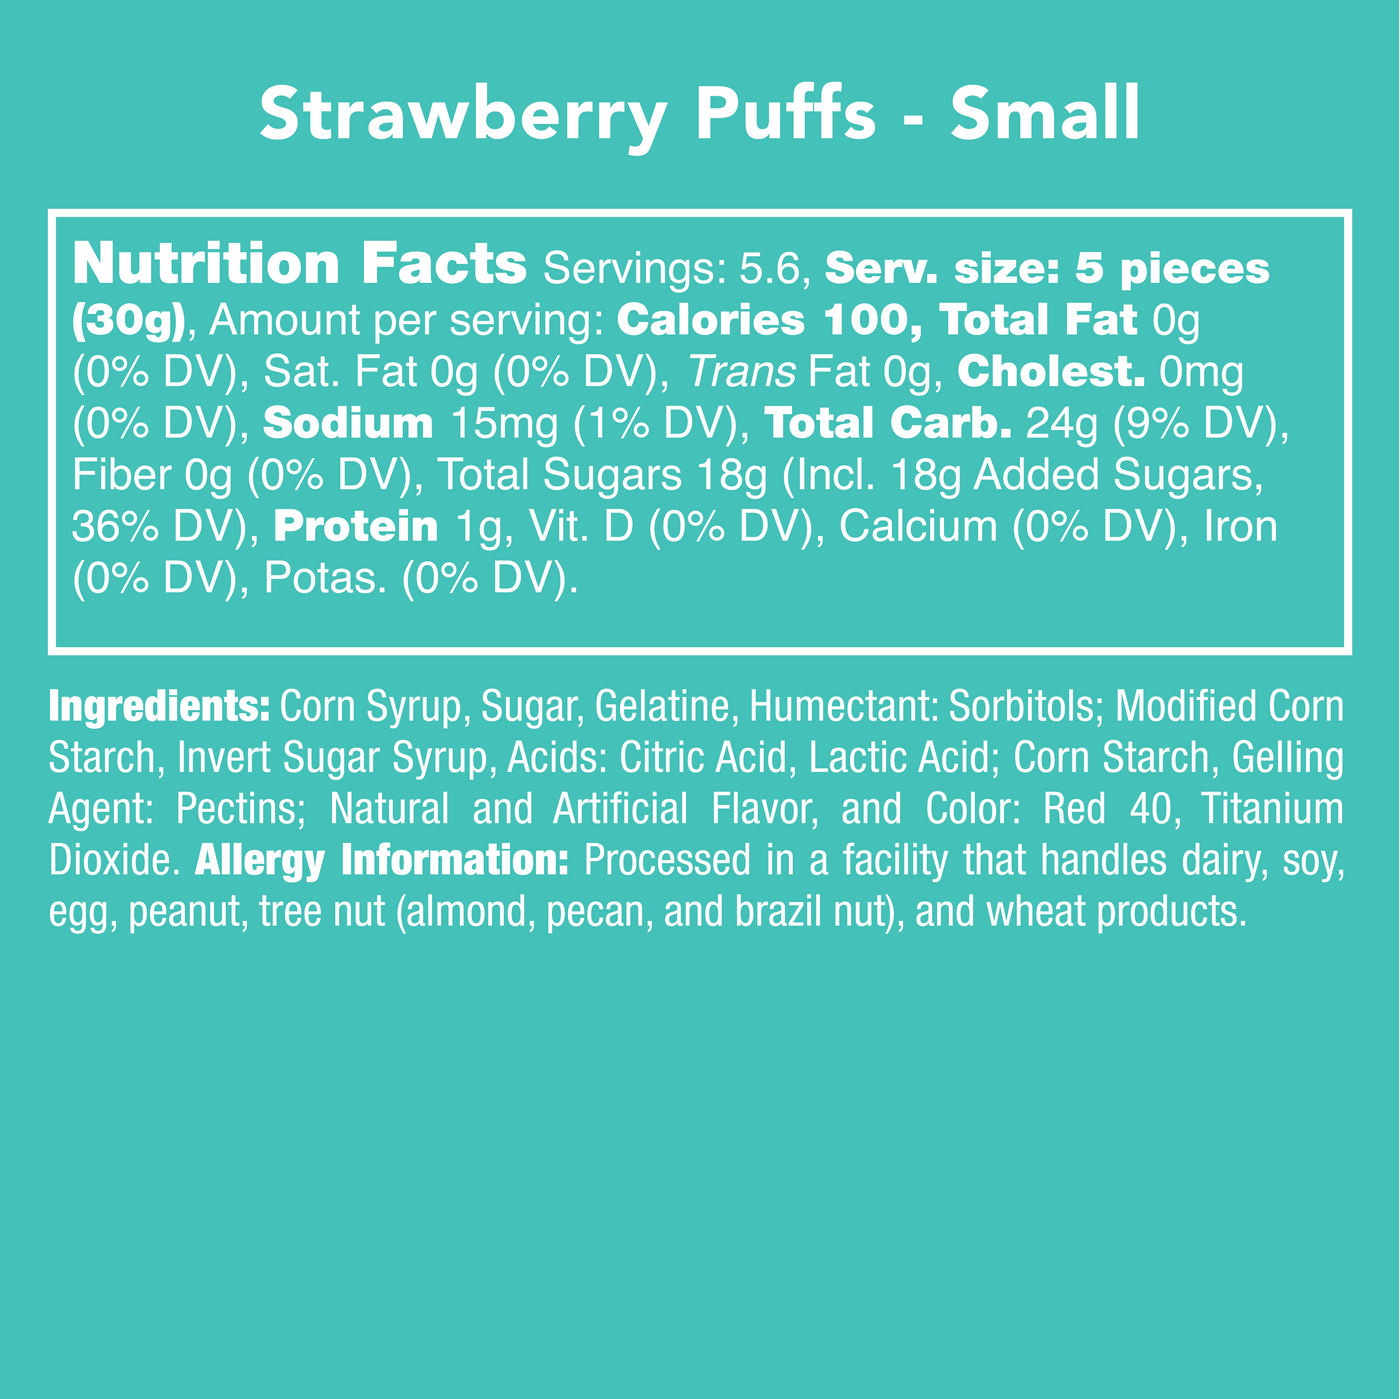 Strawberry Puffs